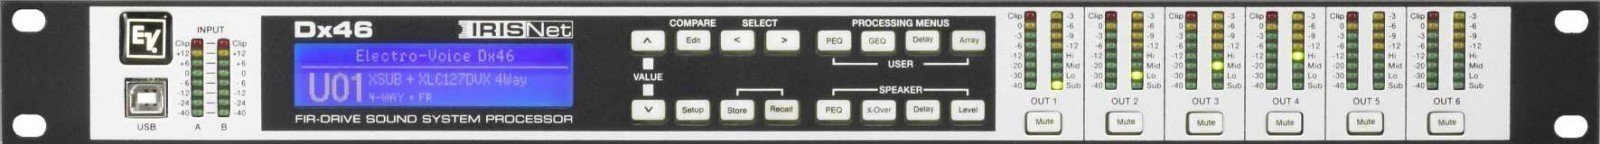 Zvukový procesor Electro Voice DX 46